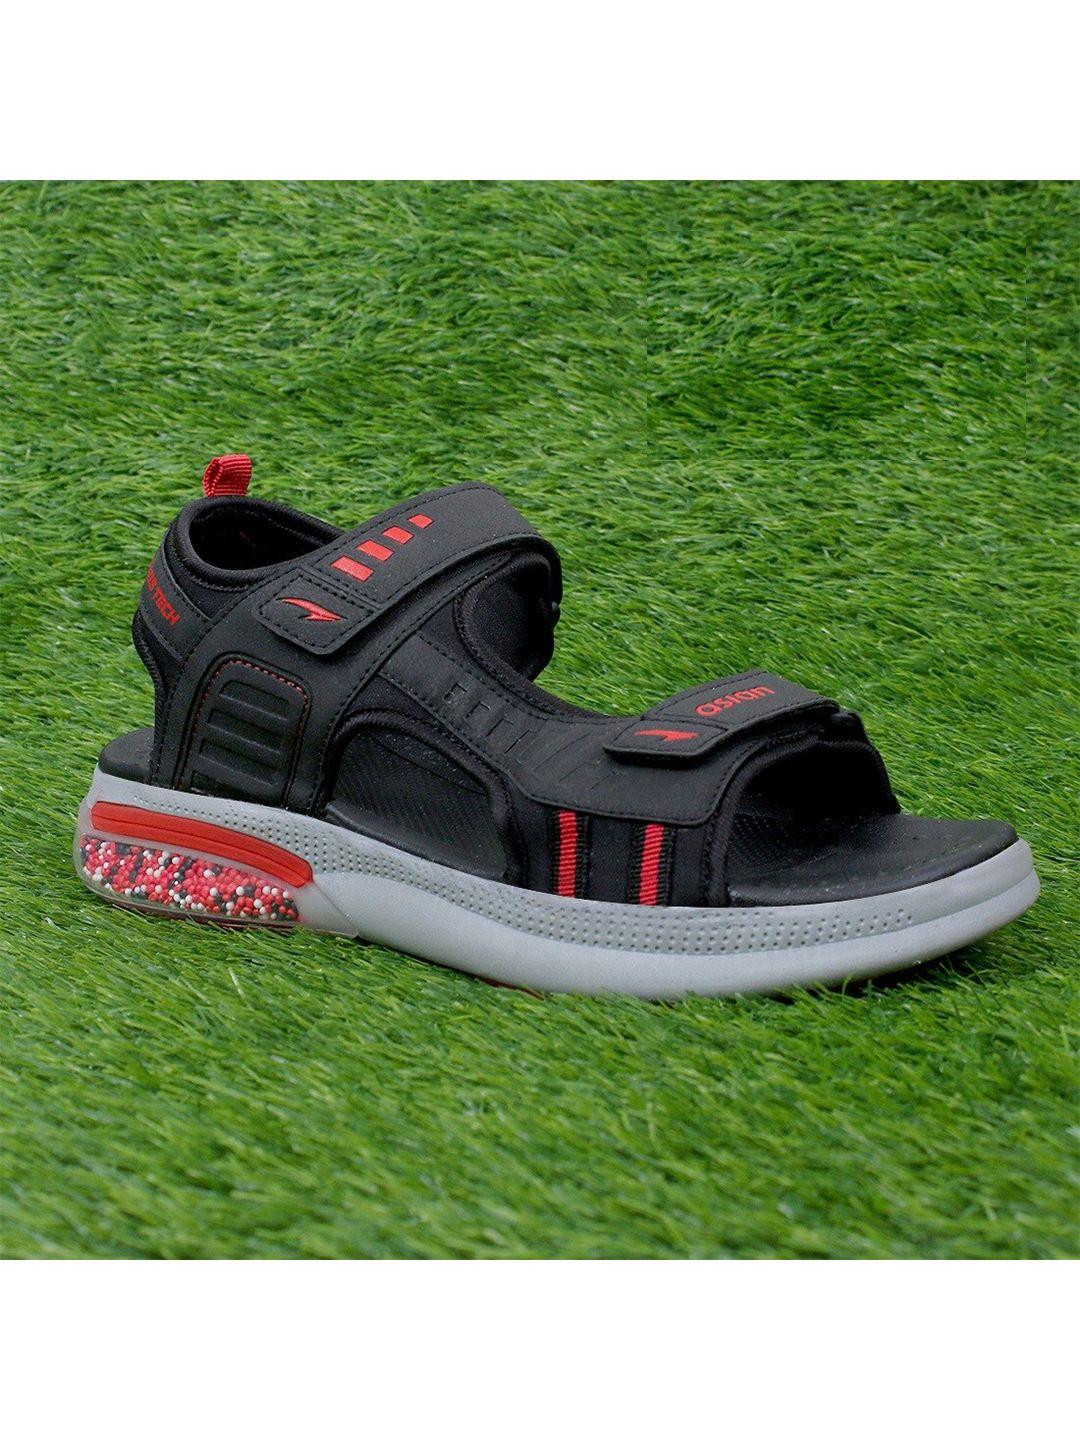 asian men black & red sports sandals